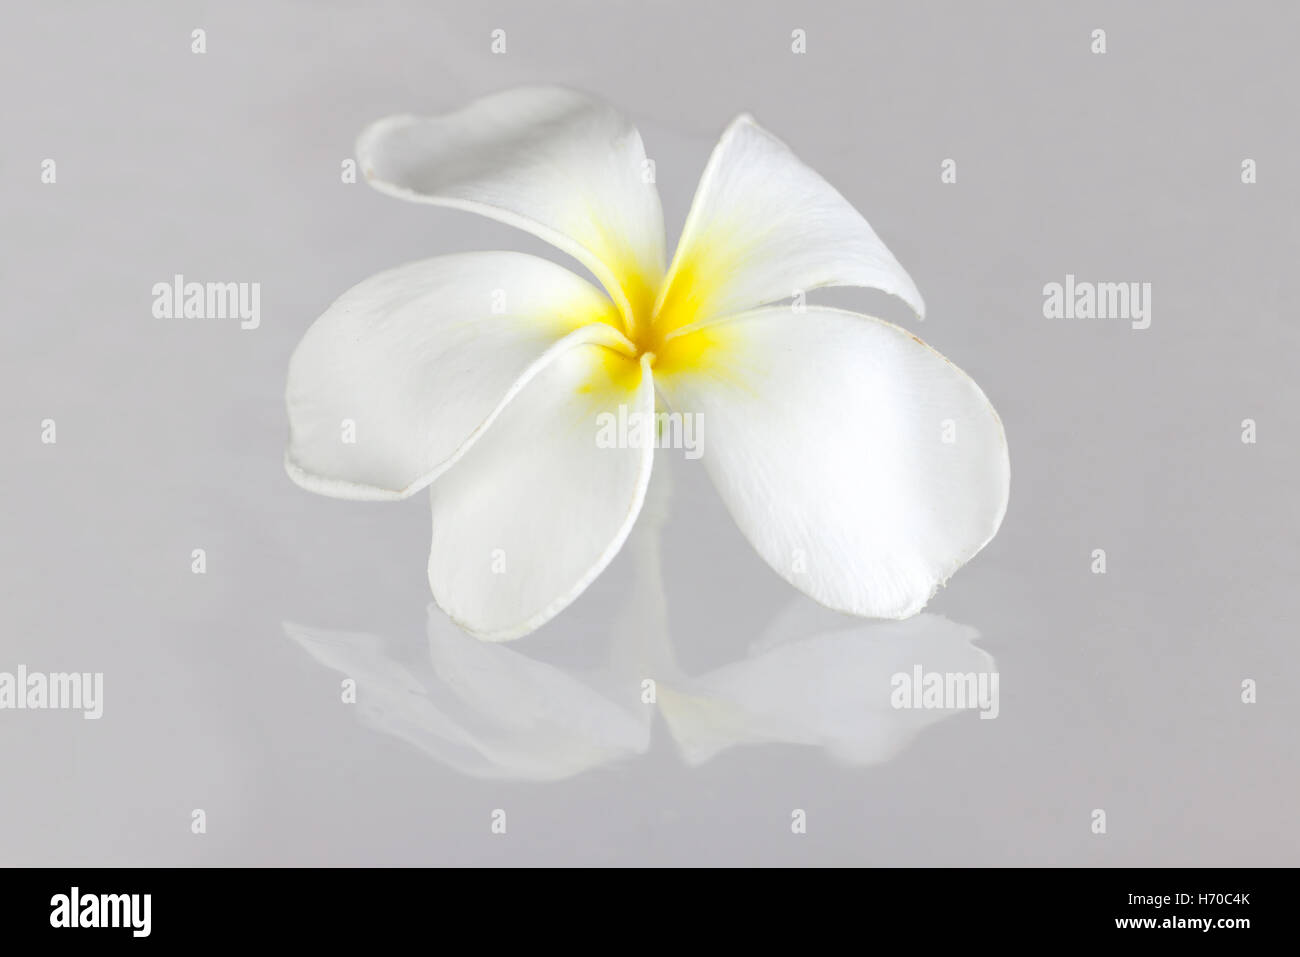 White Frangipani or Plumeria pudica with reflection on gray background. Stock Photo